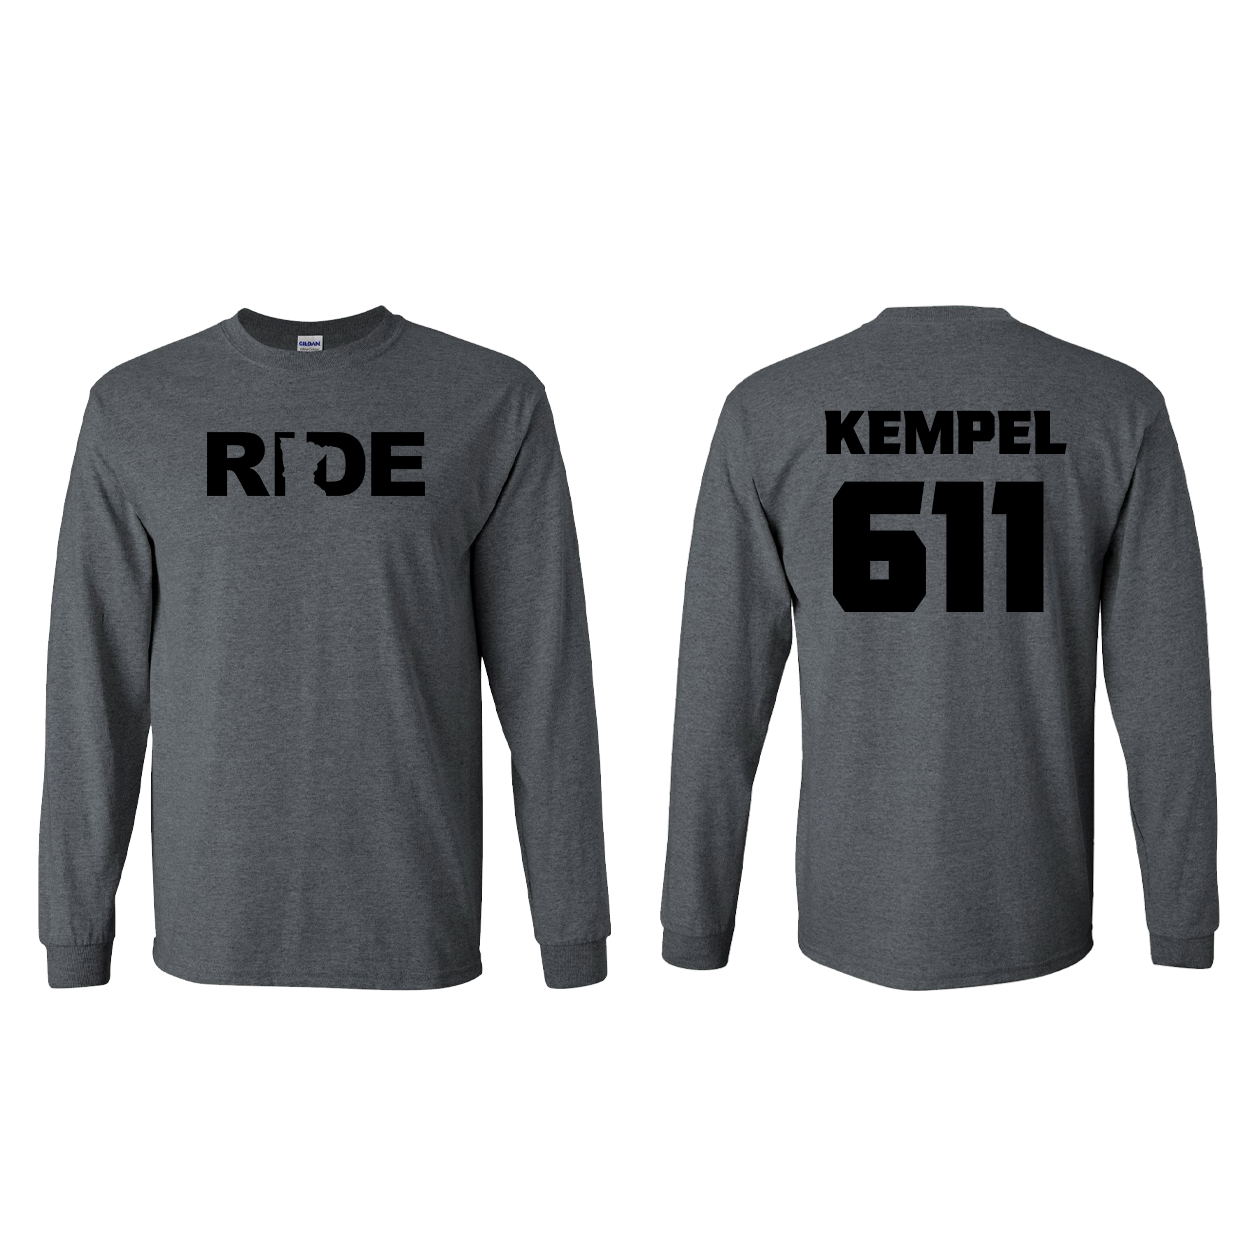 FXR BMX Race Team Classic Athlete Support Long Sleeve Shirt KEMPEL #611 Dark Heather (Black Logo)